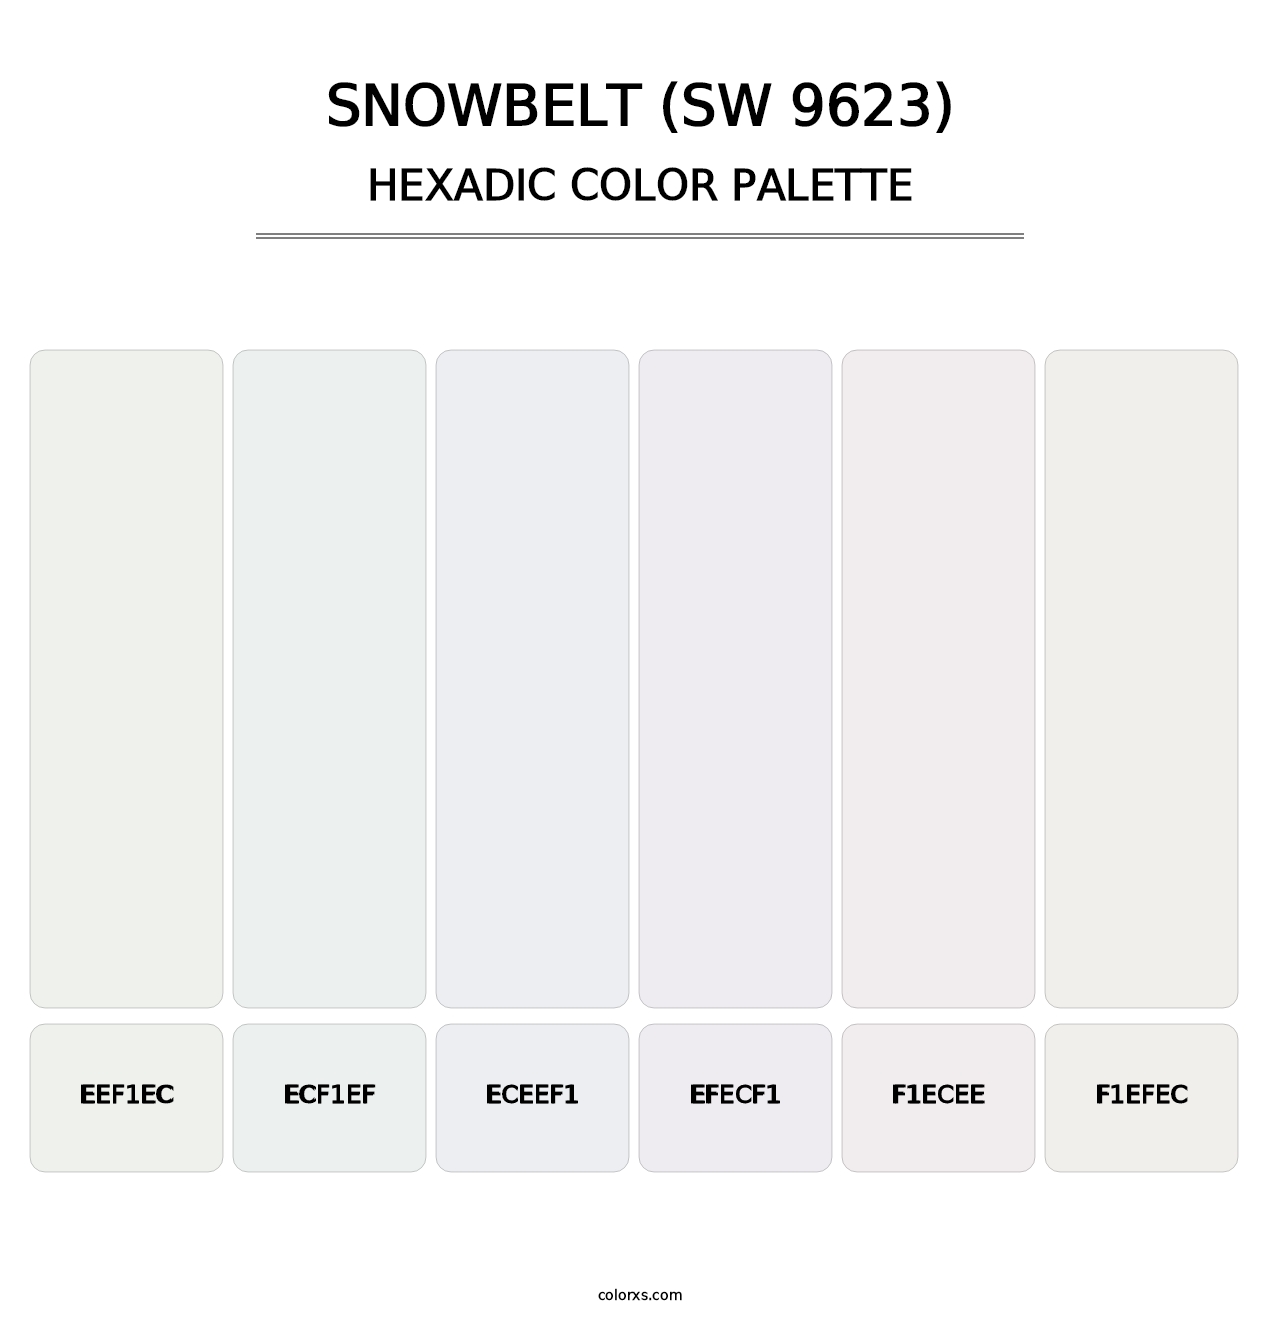 Snowbelt (SW 9623) - Hexadic Color Palette